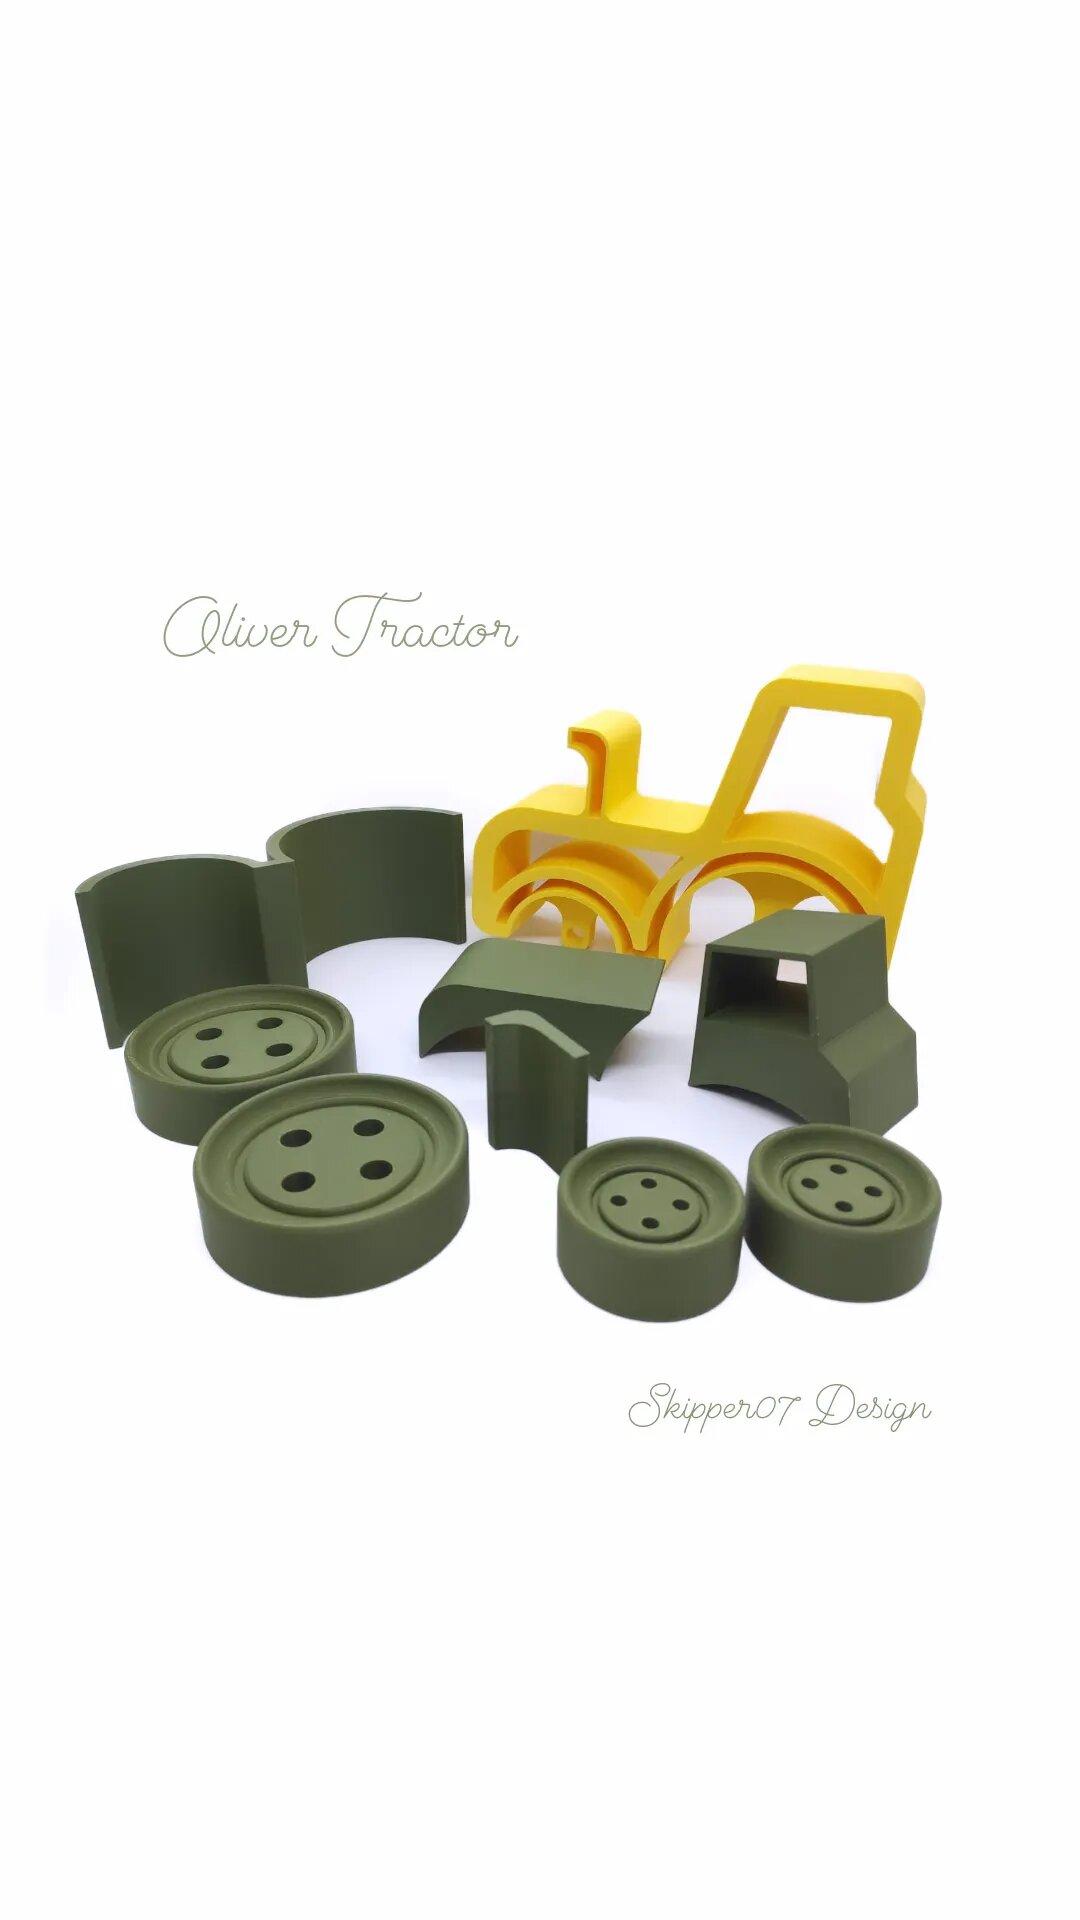 Oliver Tractor 2.5 3d model